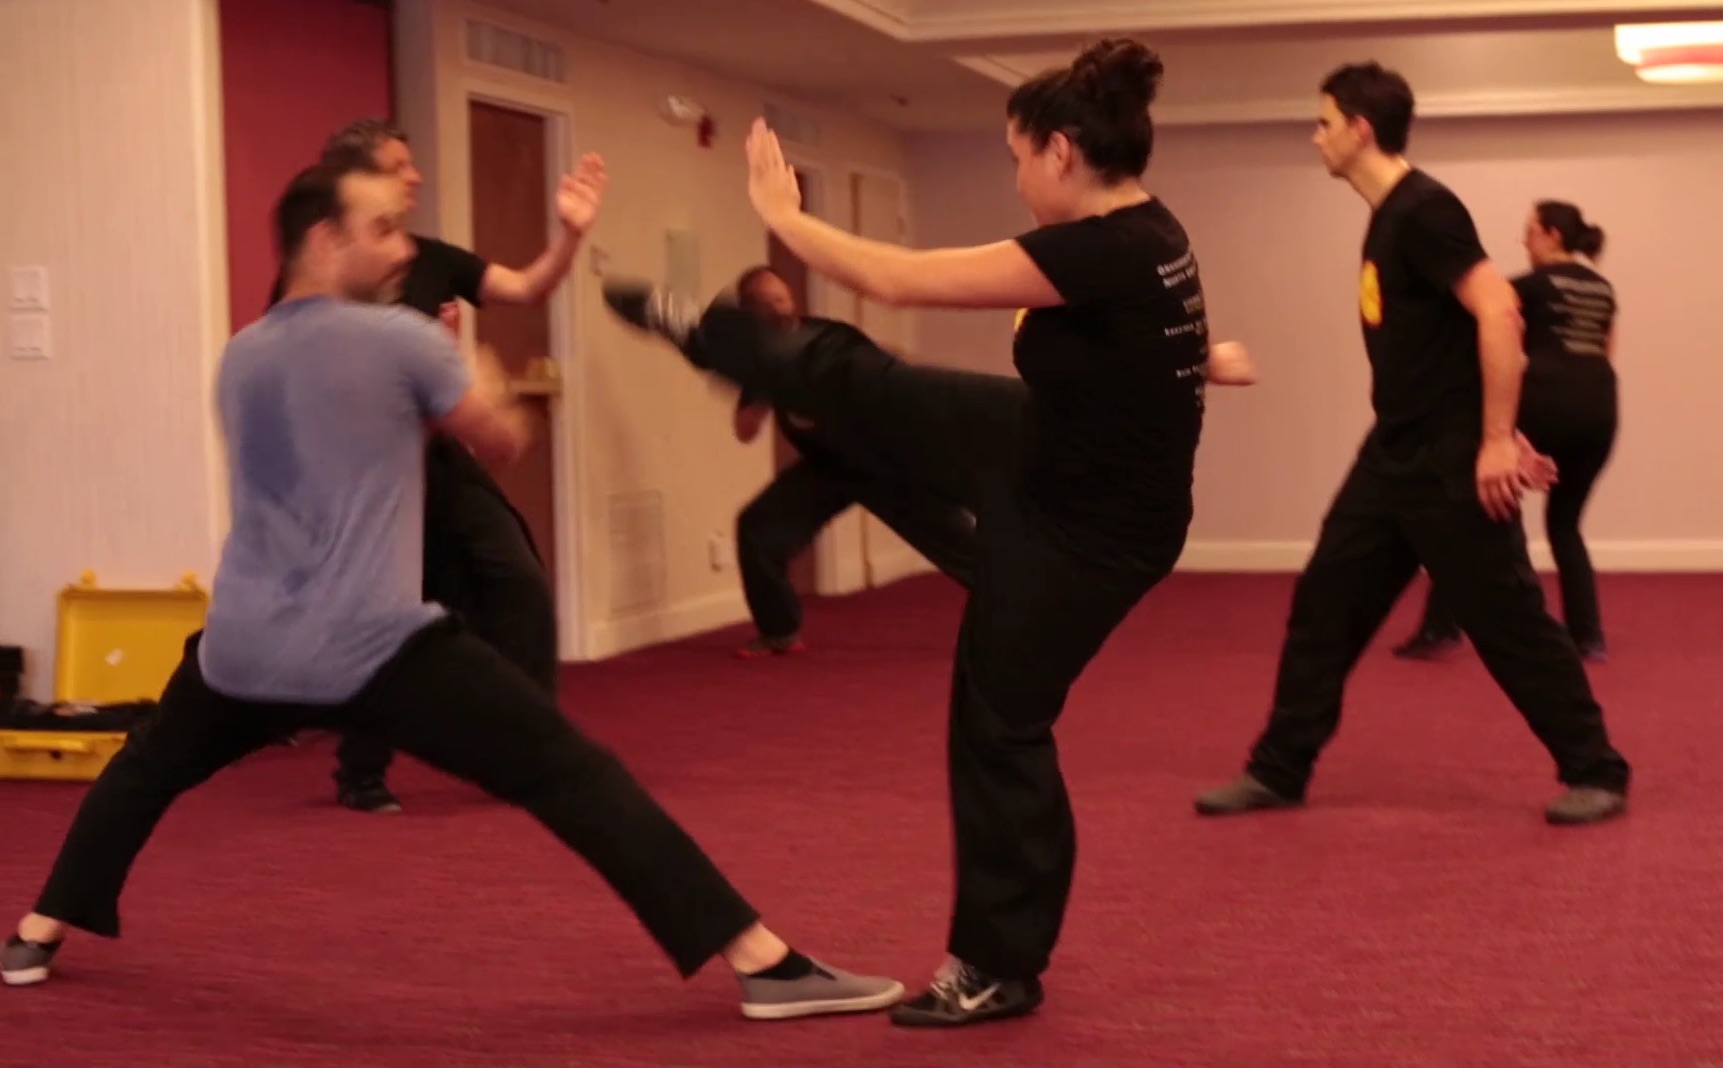 Shaolin kicks